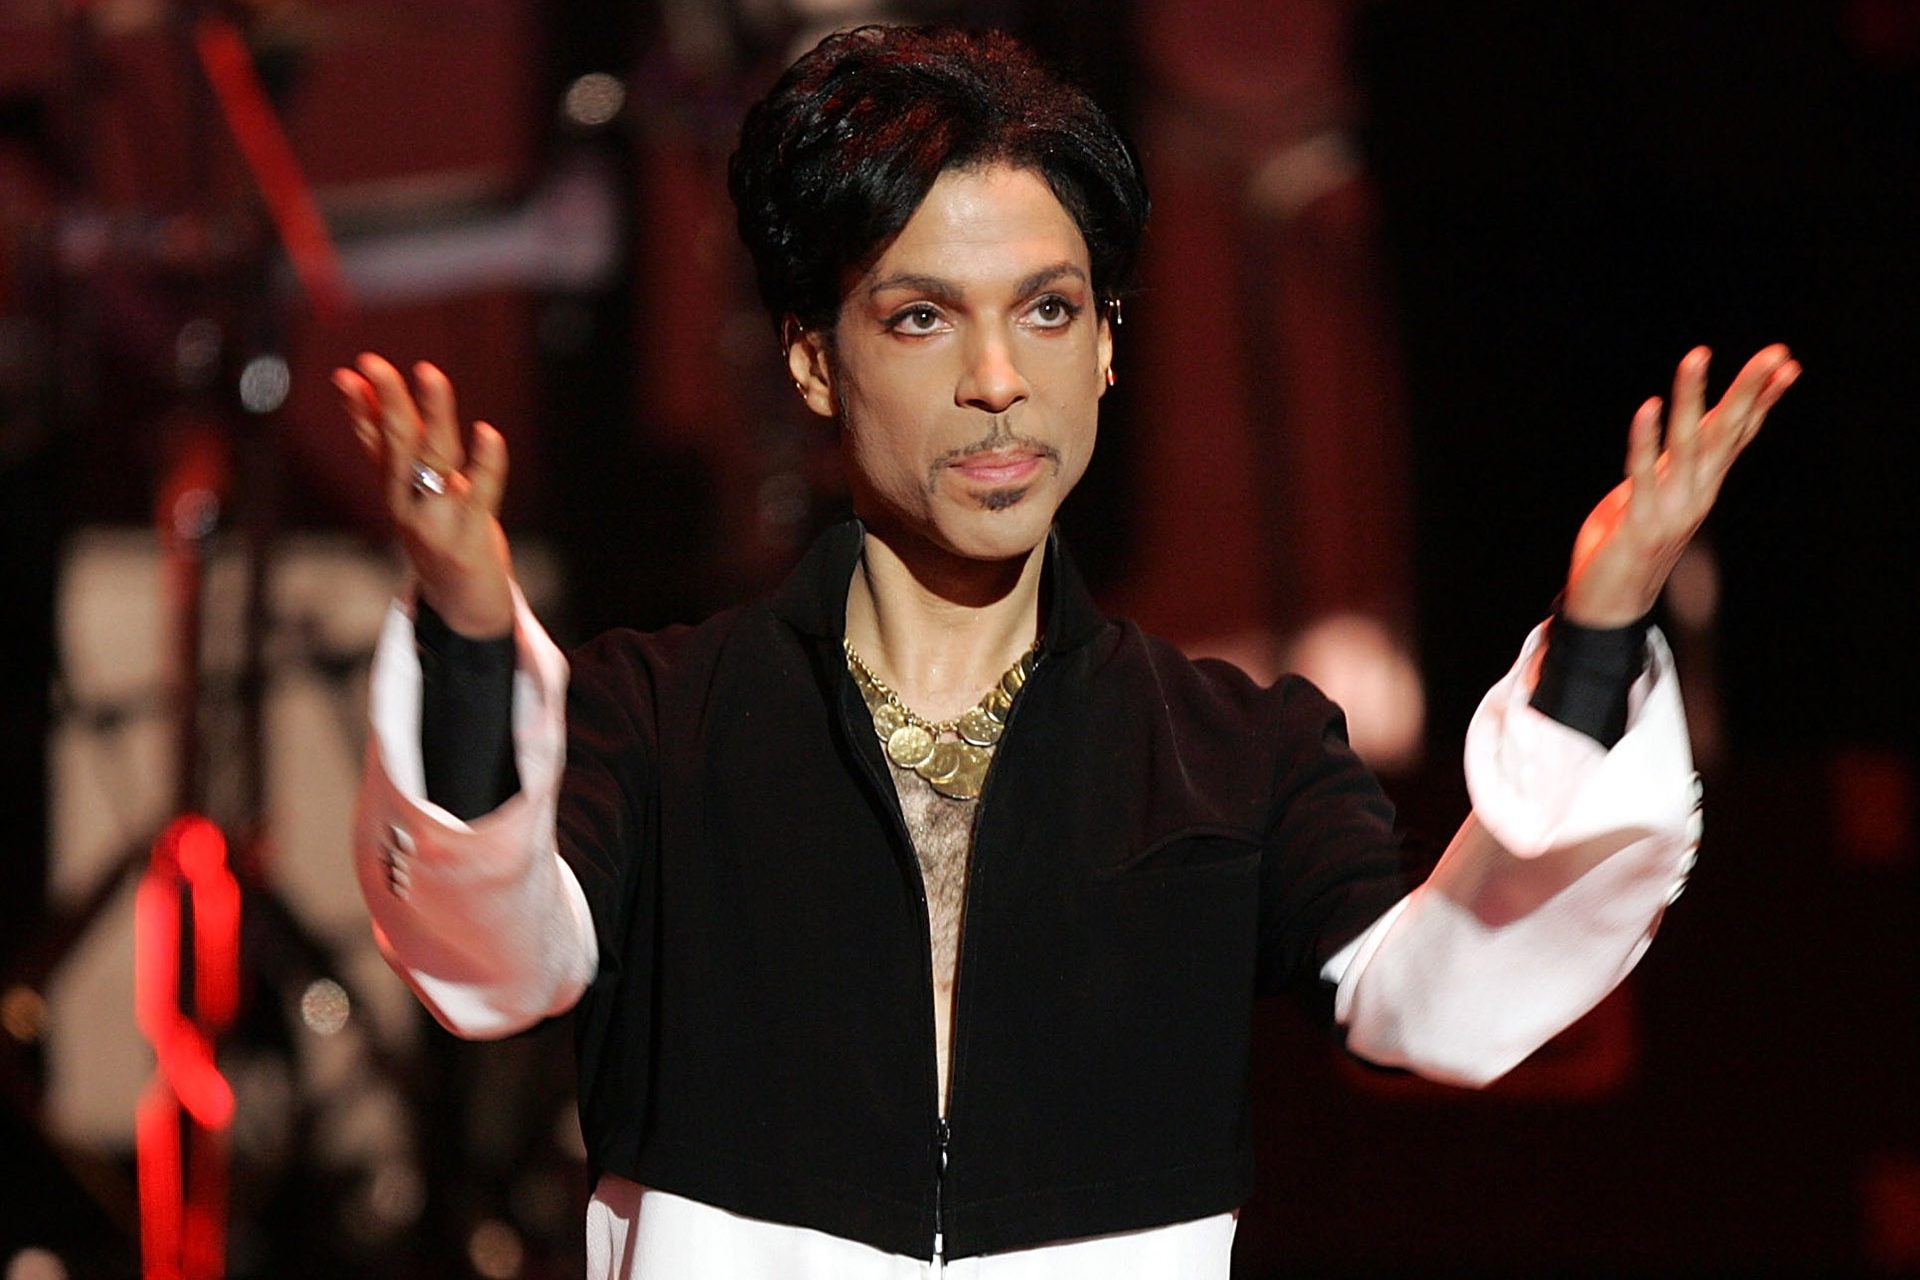 Prince, a genre-spanning legend